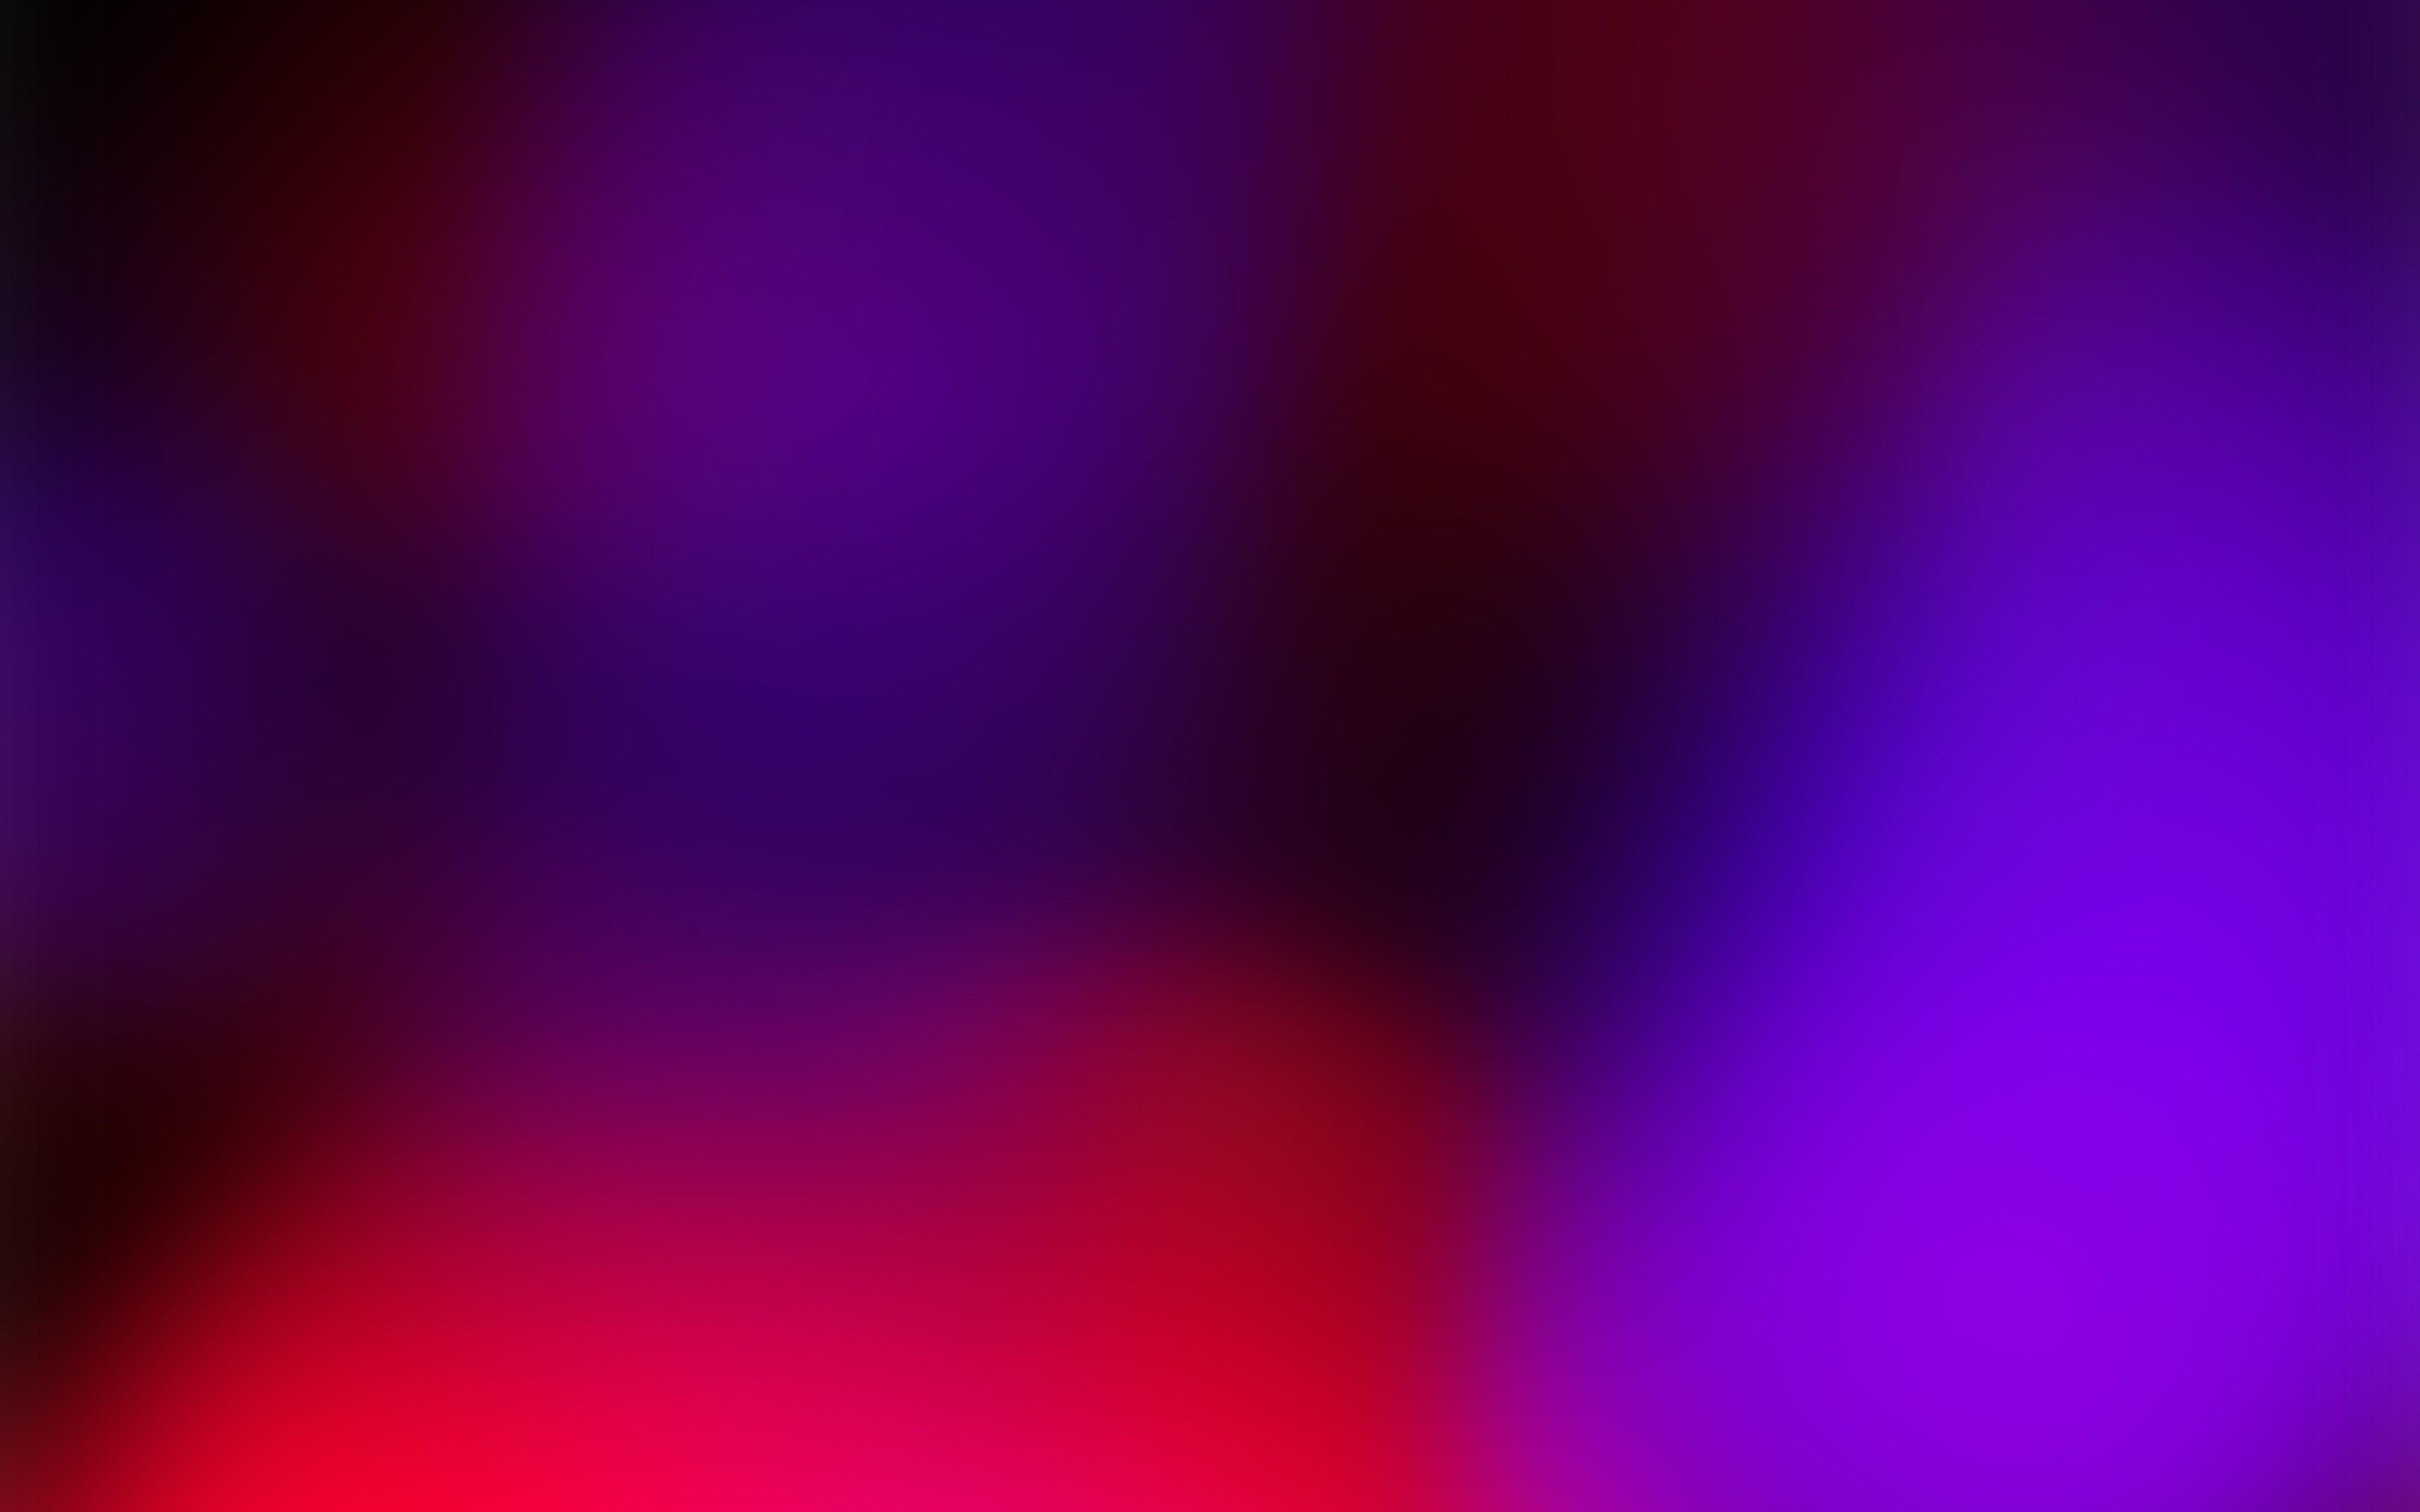 wallpaper for desktop, laptop. purple red party blur gradation